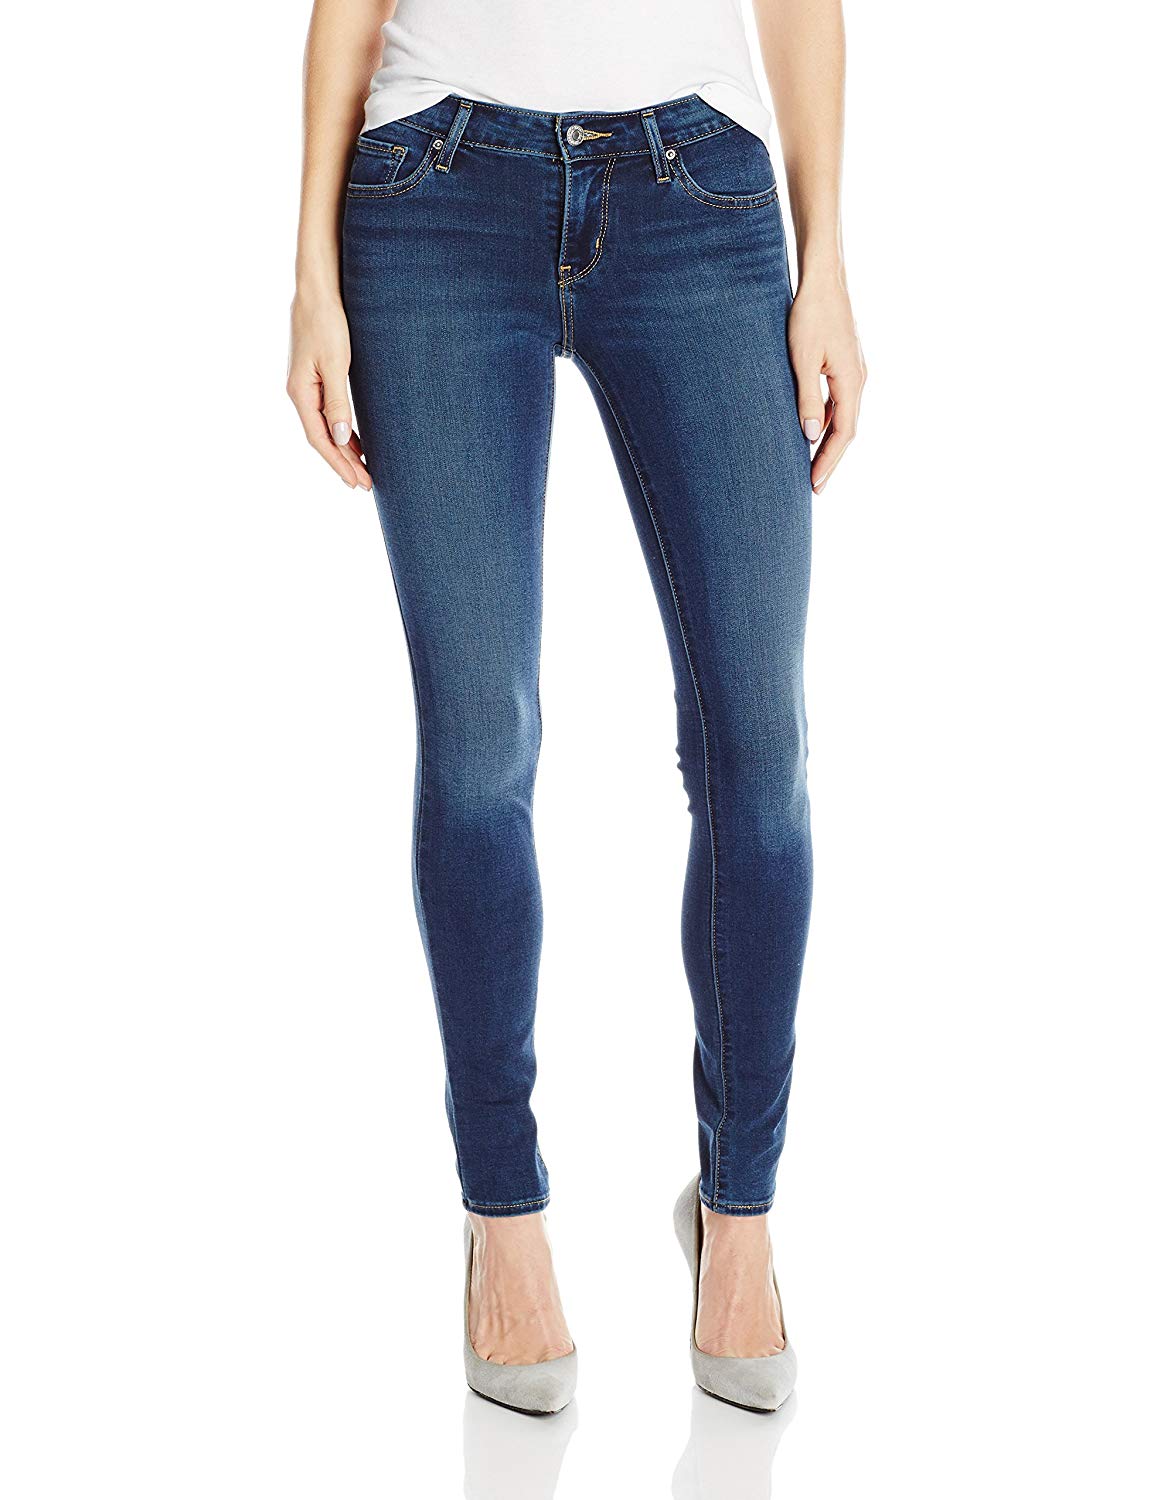 Levis - Womens 711 Skinny Jeans